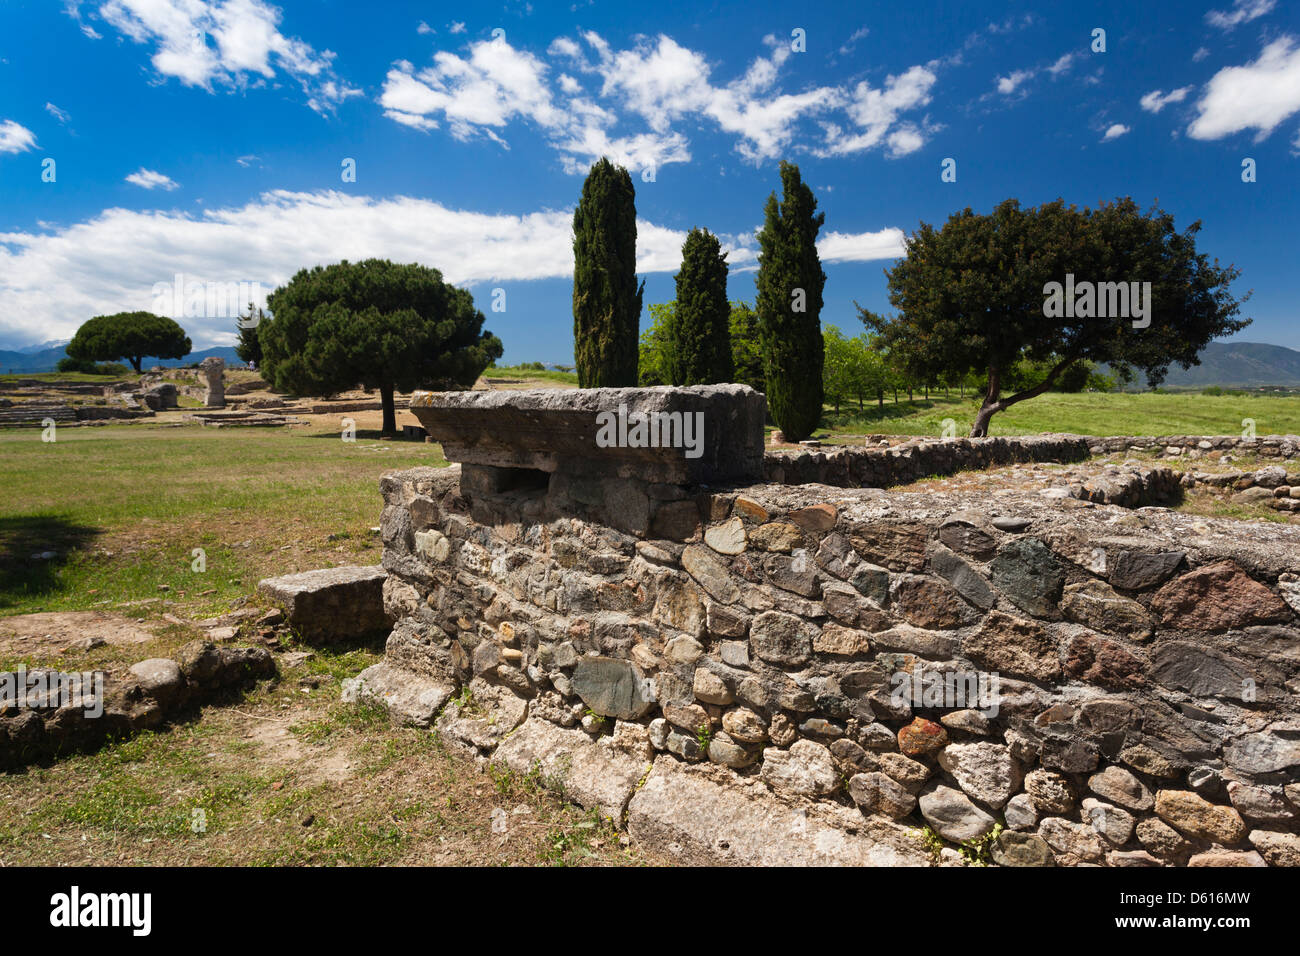 France, Corsica, Costa Serena, Aleria, Ancient Aleria, Greek and Roman ruins Stock Photo